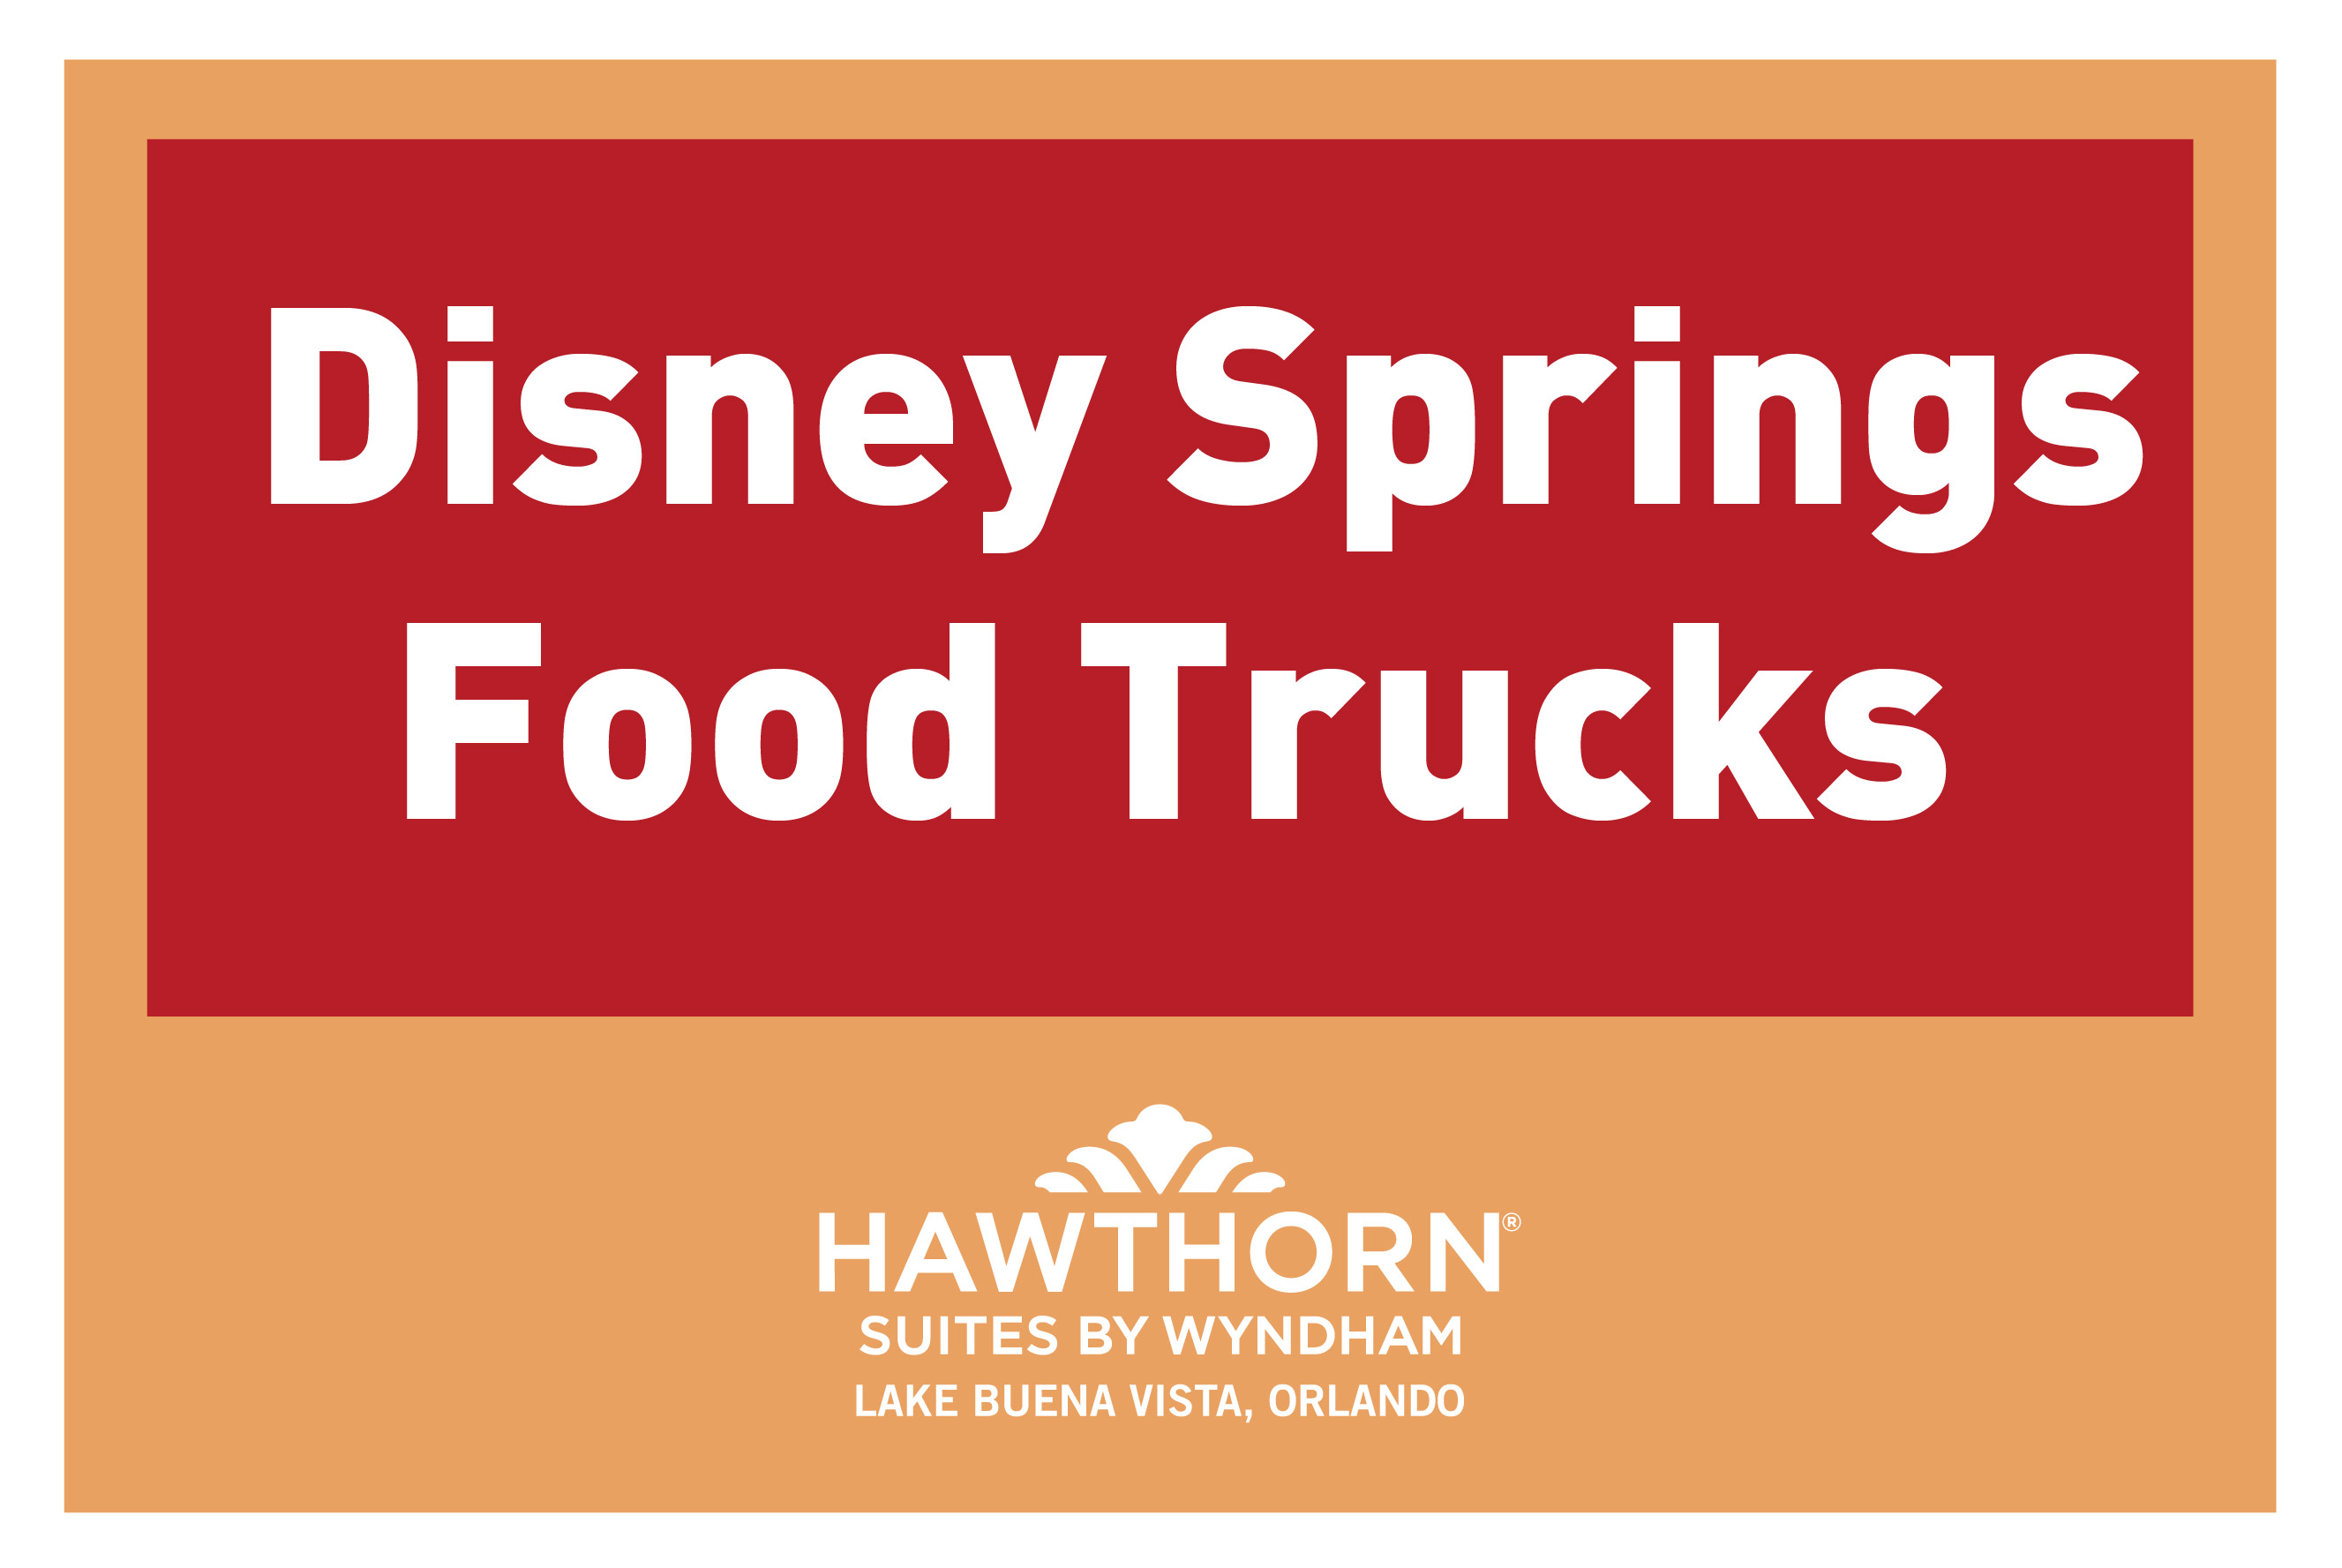 Disney Springs Food Trucks - Hawthorn Suites By Wyndham Lake Buena Vista, Orlando